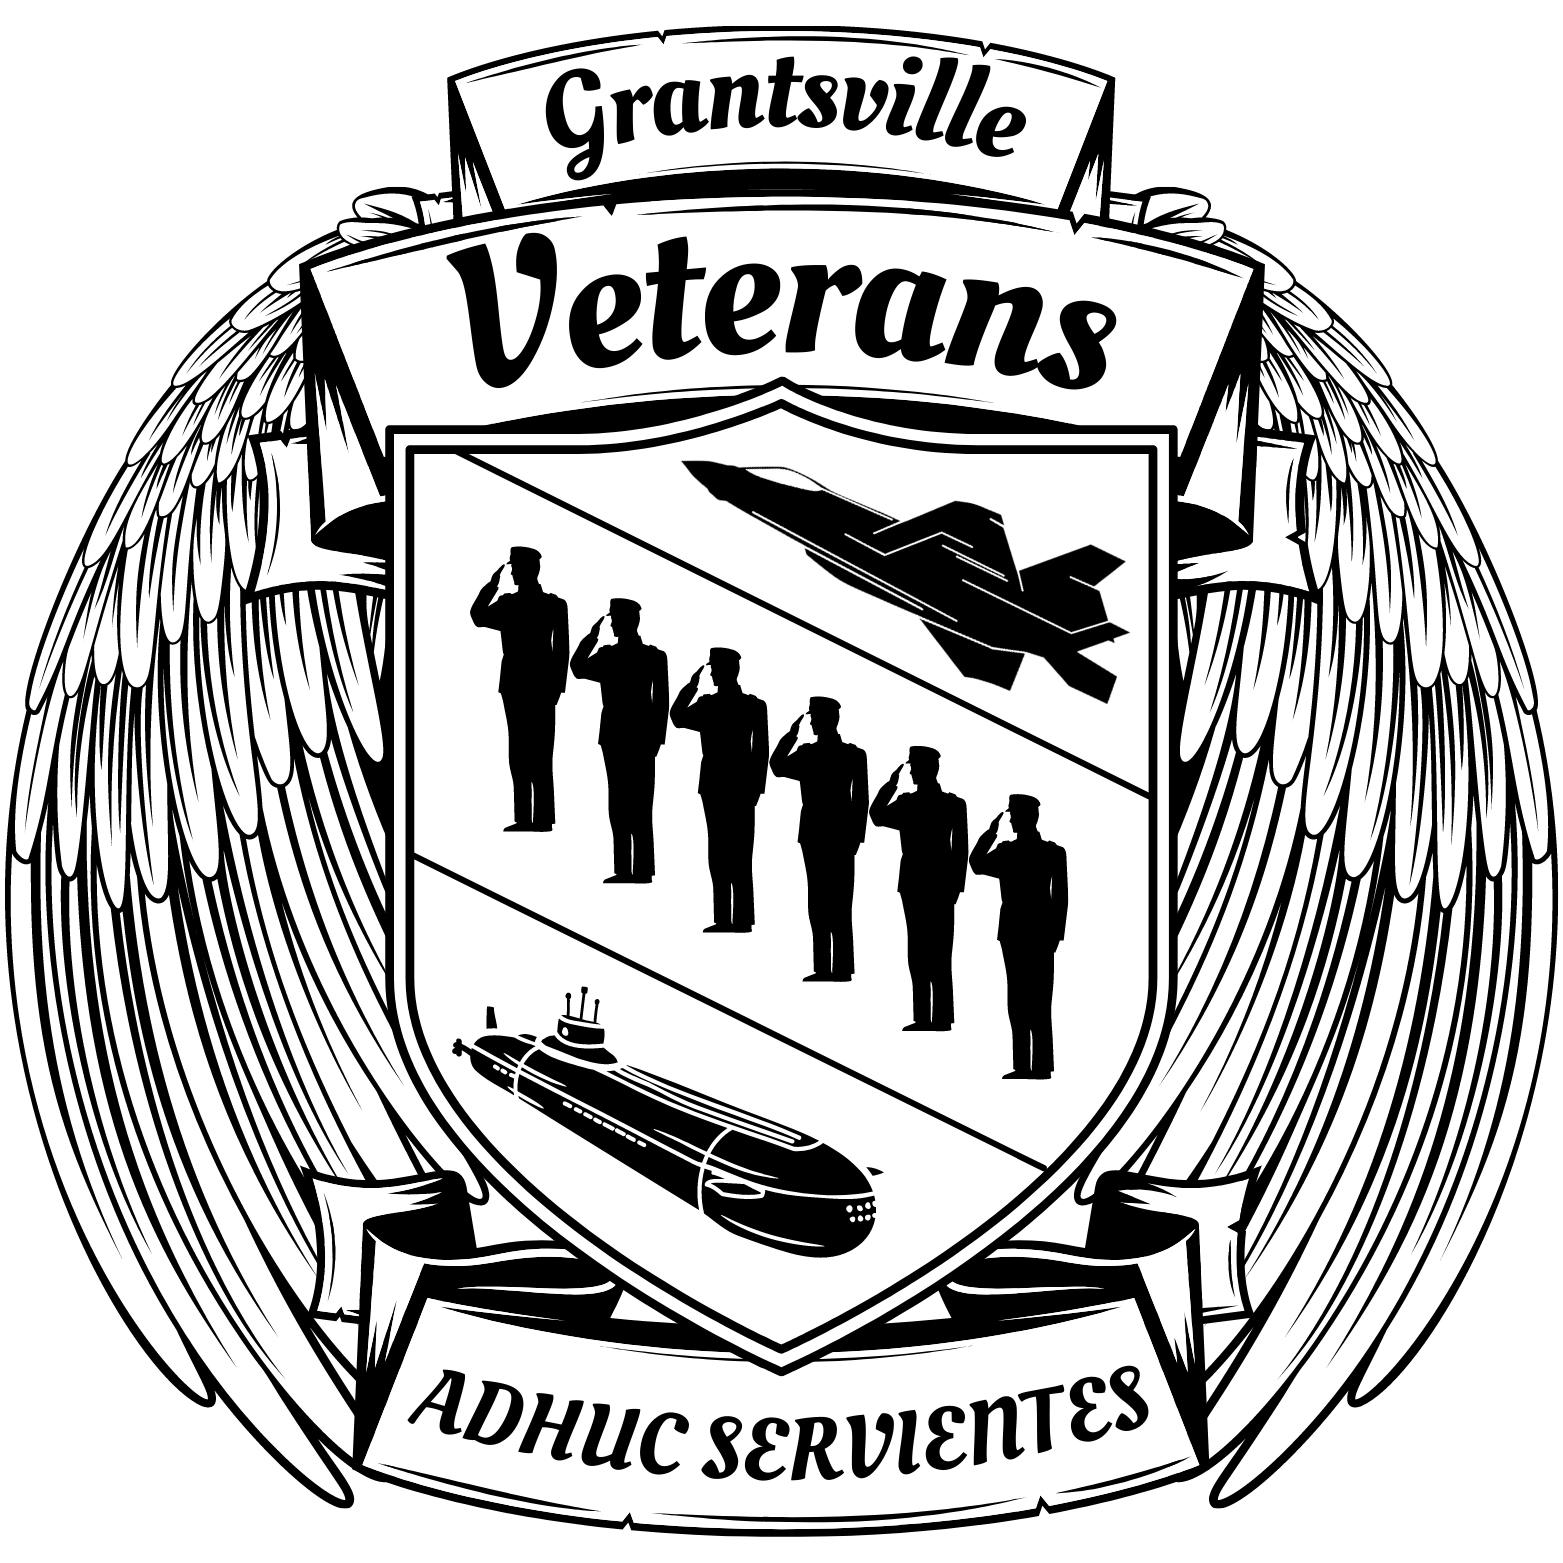 Grantsville Veterans Committee Logo - Adhuc Servientes